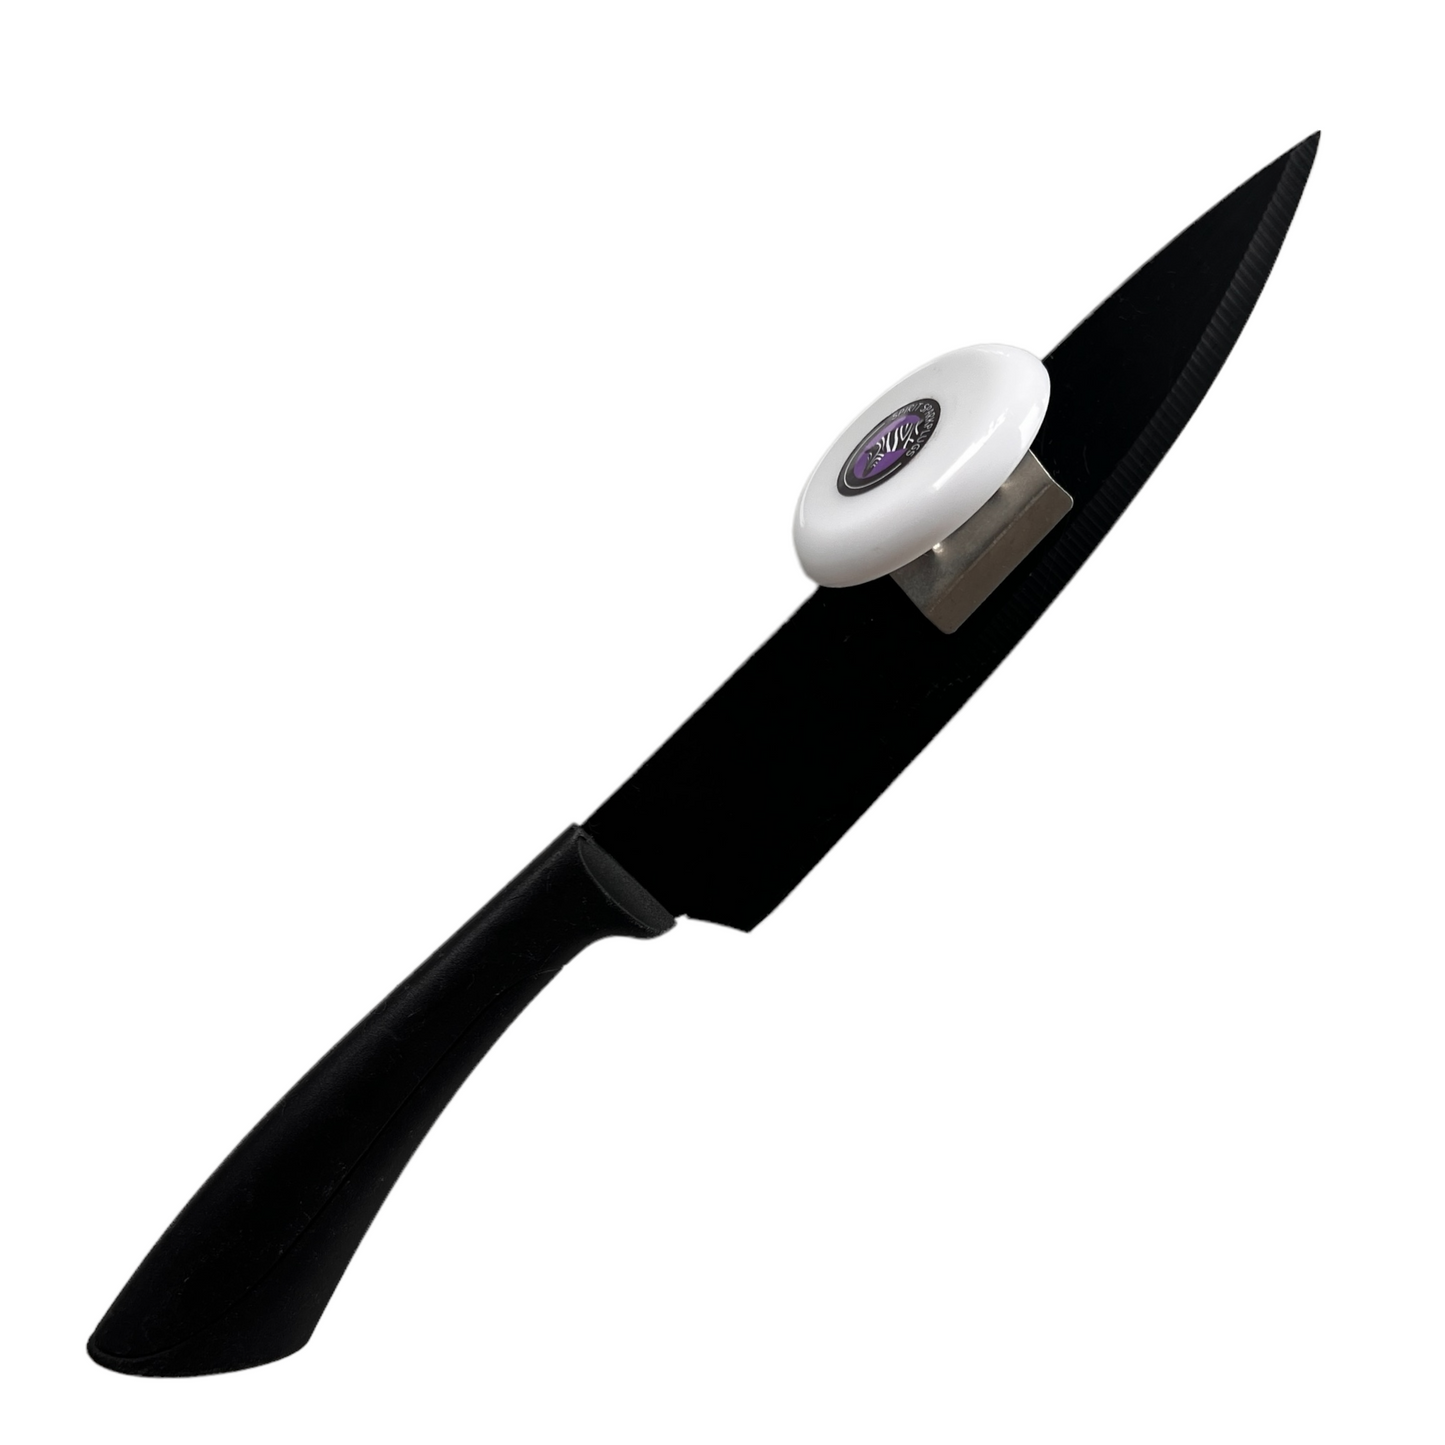 Stainless Steel Knife Cutting Aid  SPIRIT SPARKPLUGS   